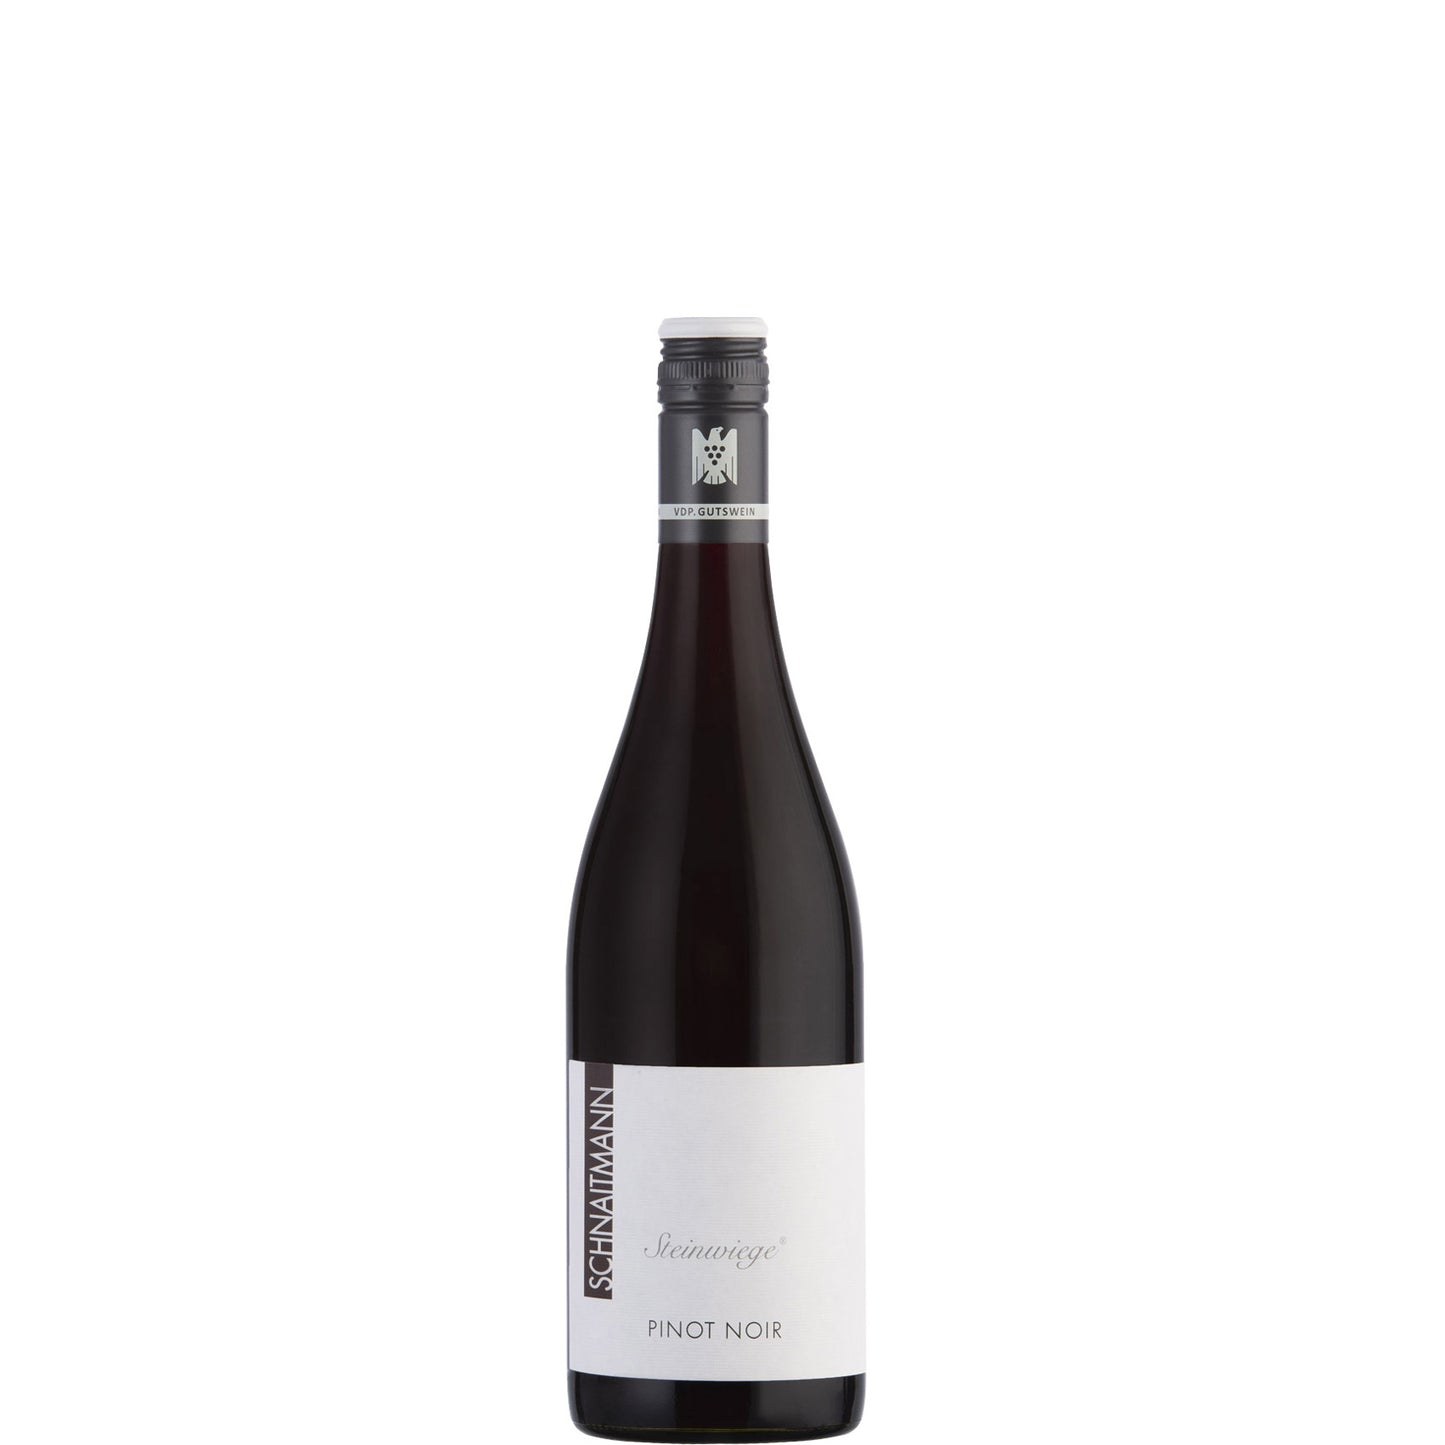 Weingut Schnaitmann, Steinwiege Pinot Noir Trocken, 2017 - Half-bottle